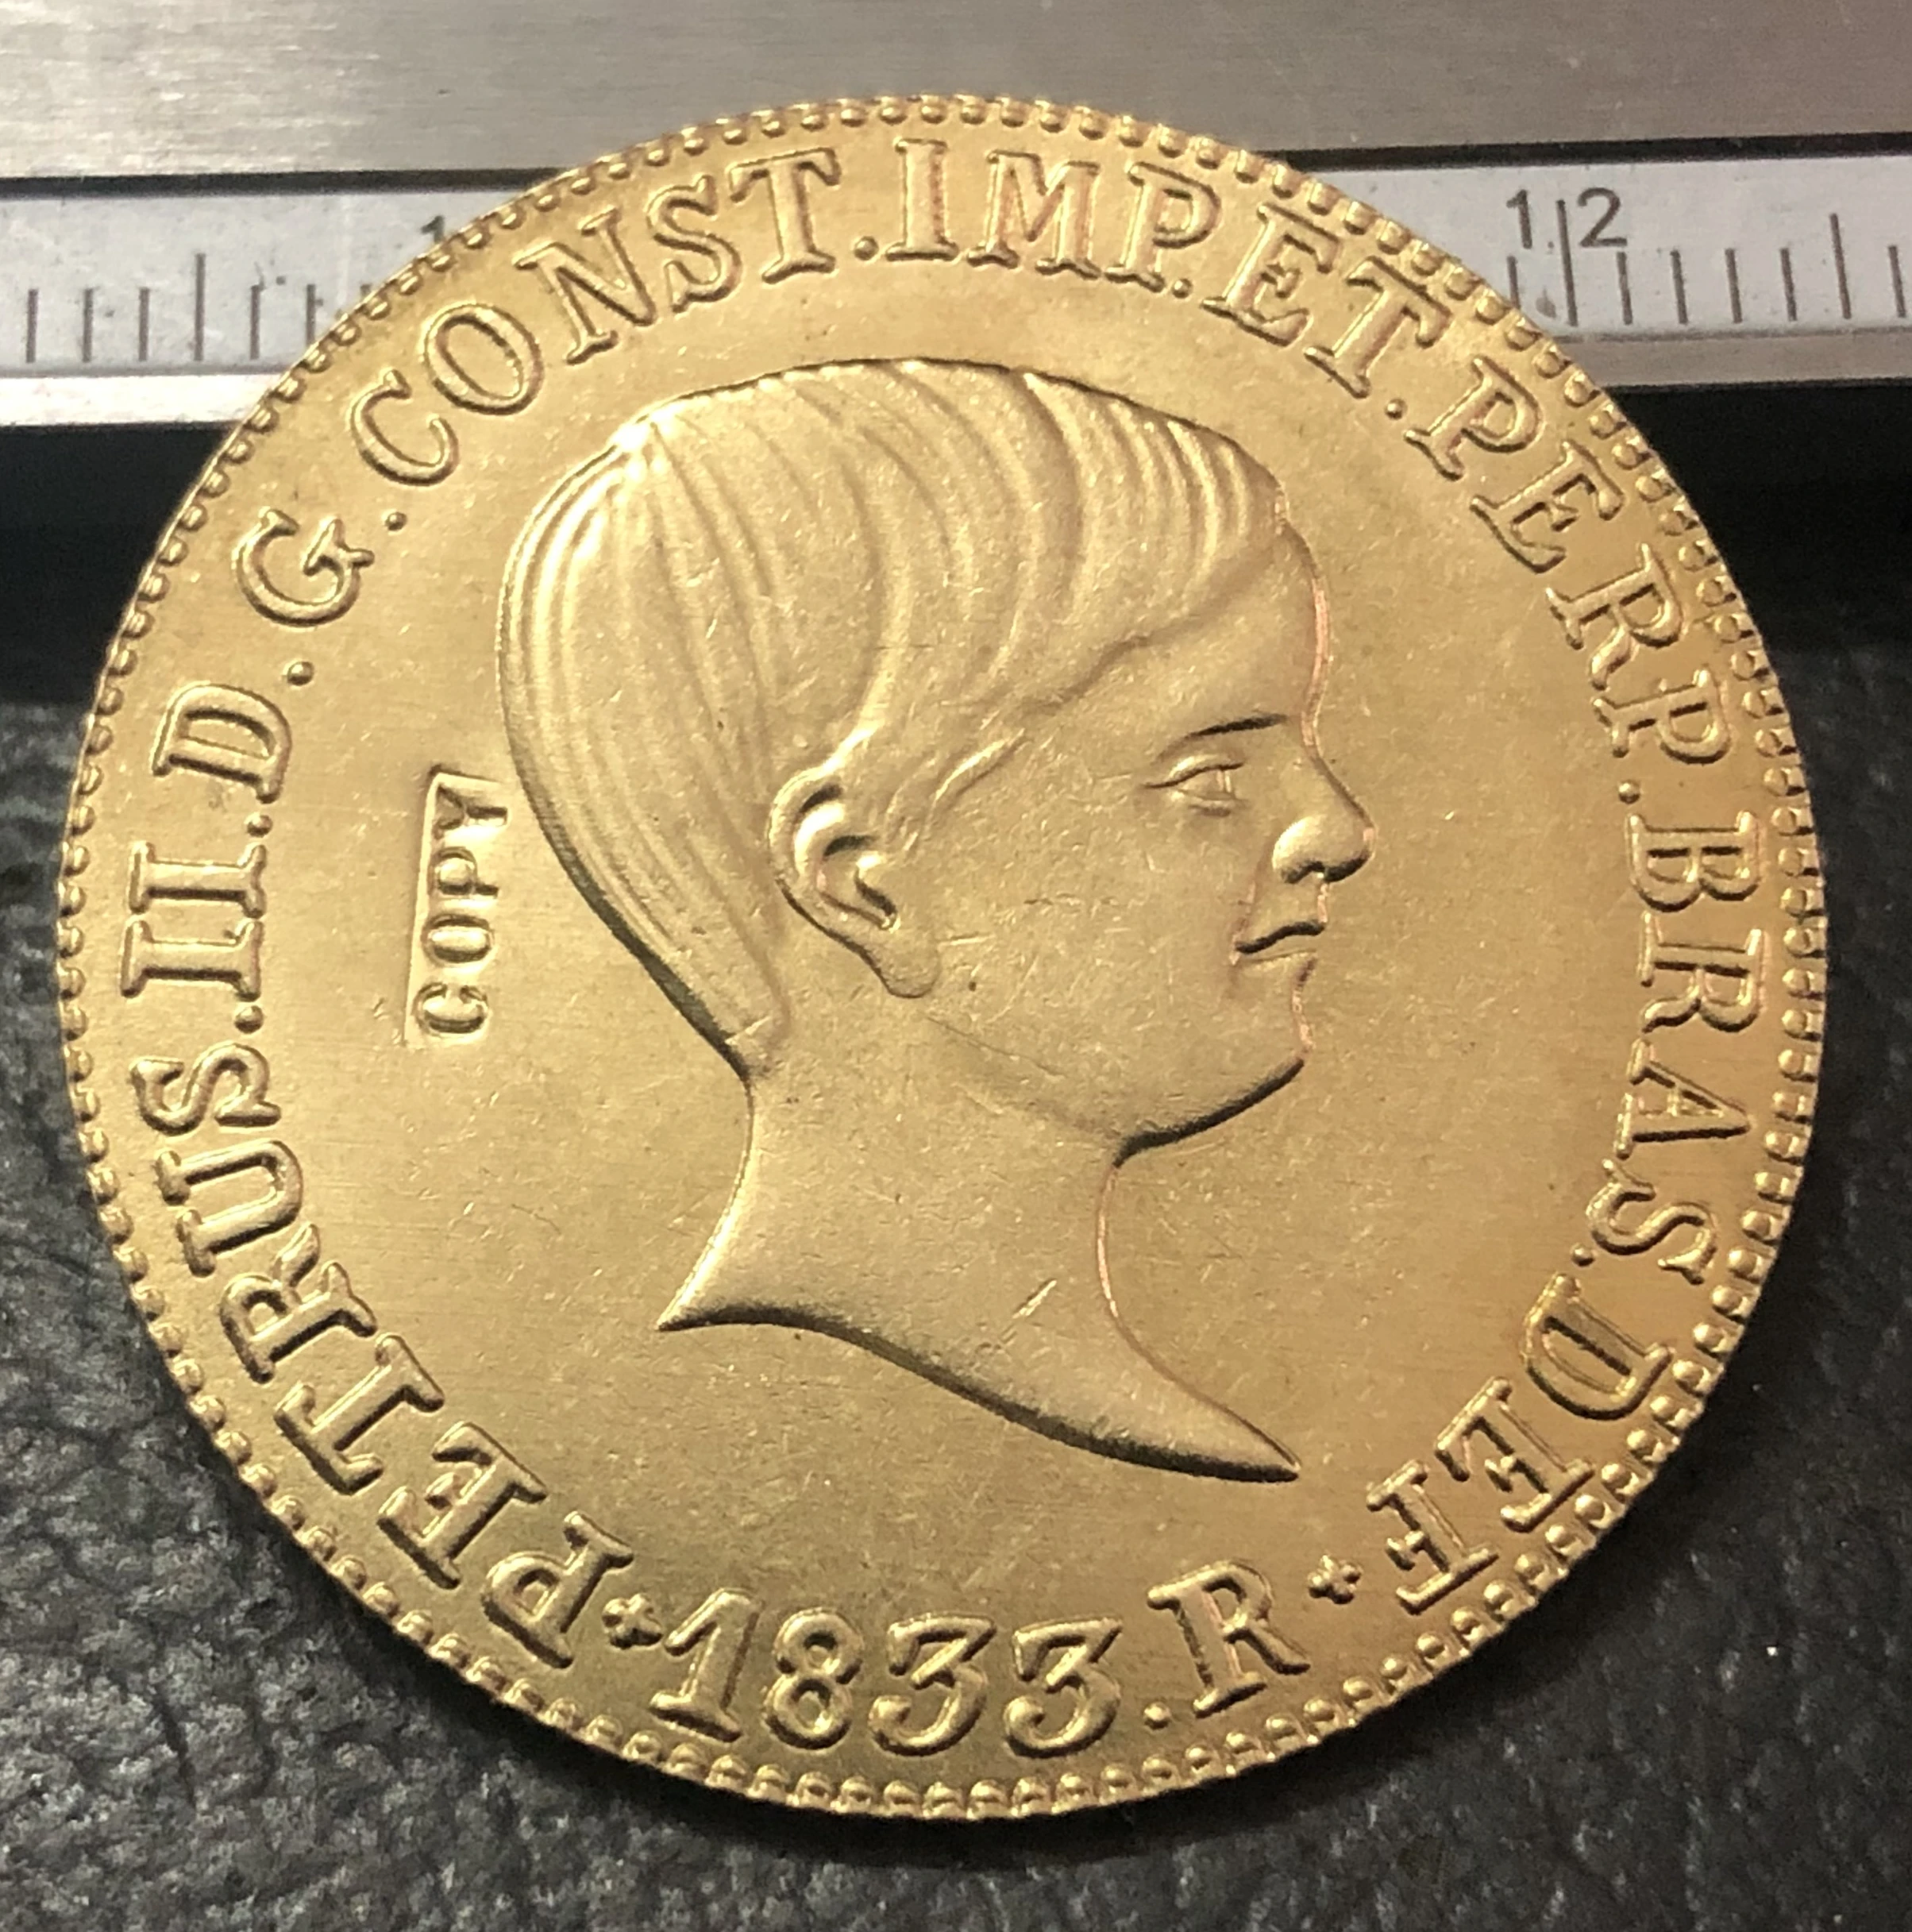 1833 Бразилия 6400 Reis-Pedro II Золотая копия монеты | Дом и сад - Фото №1